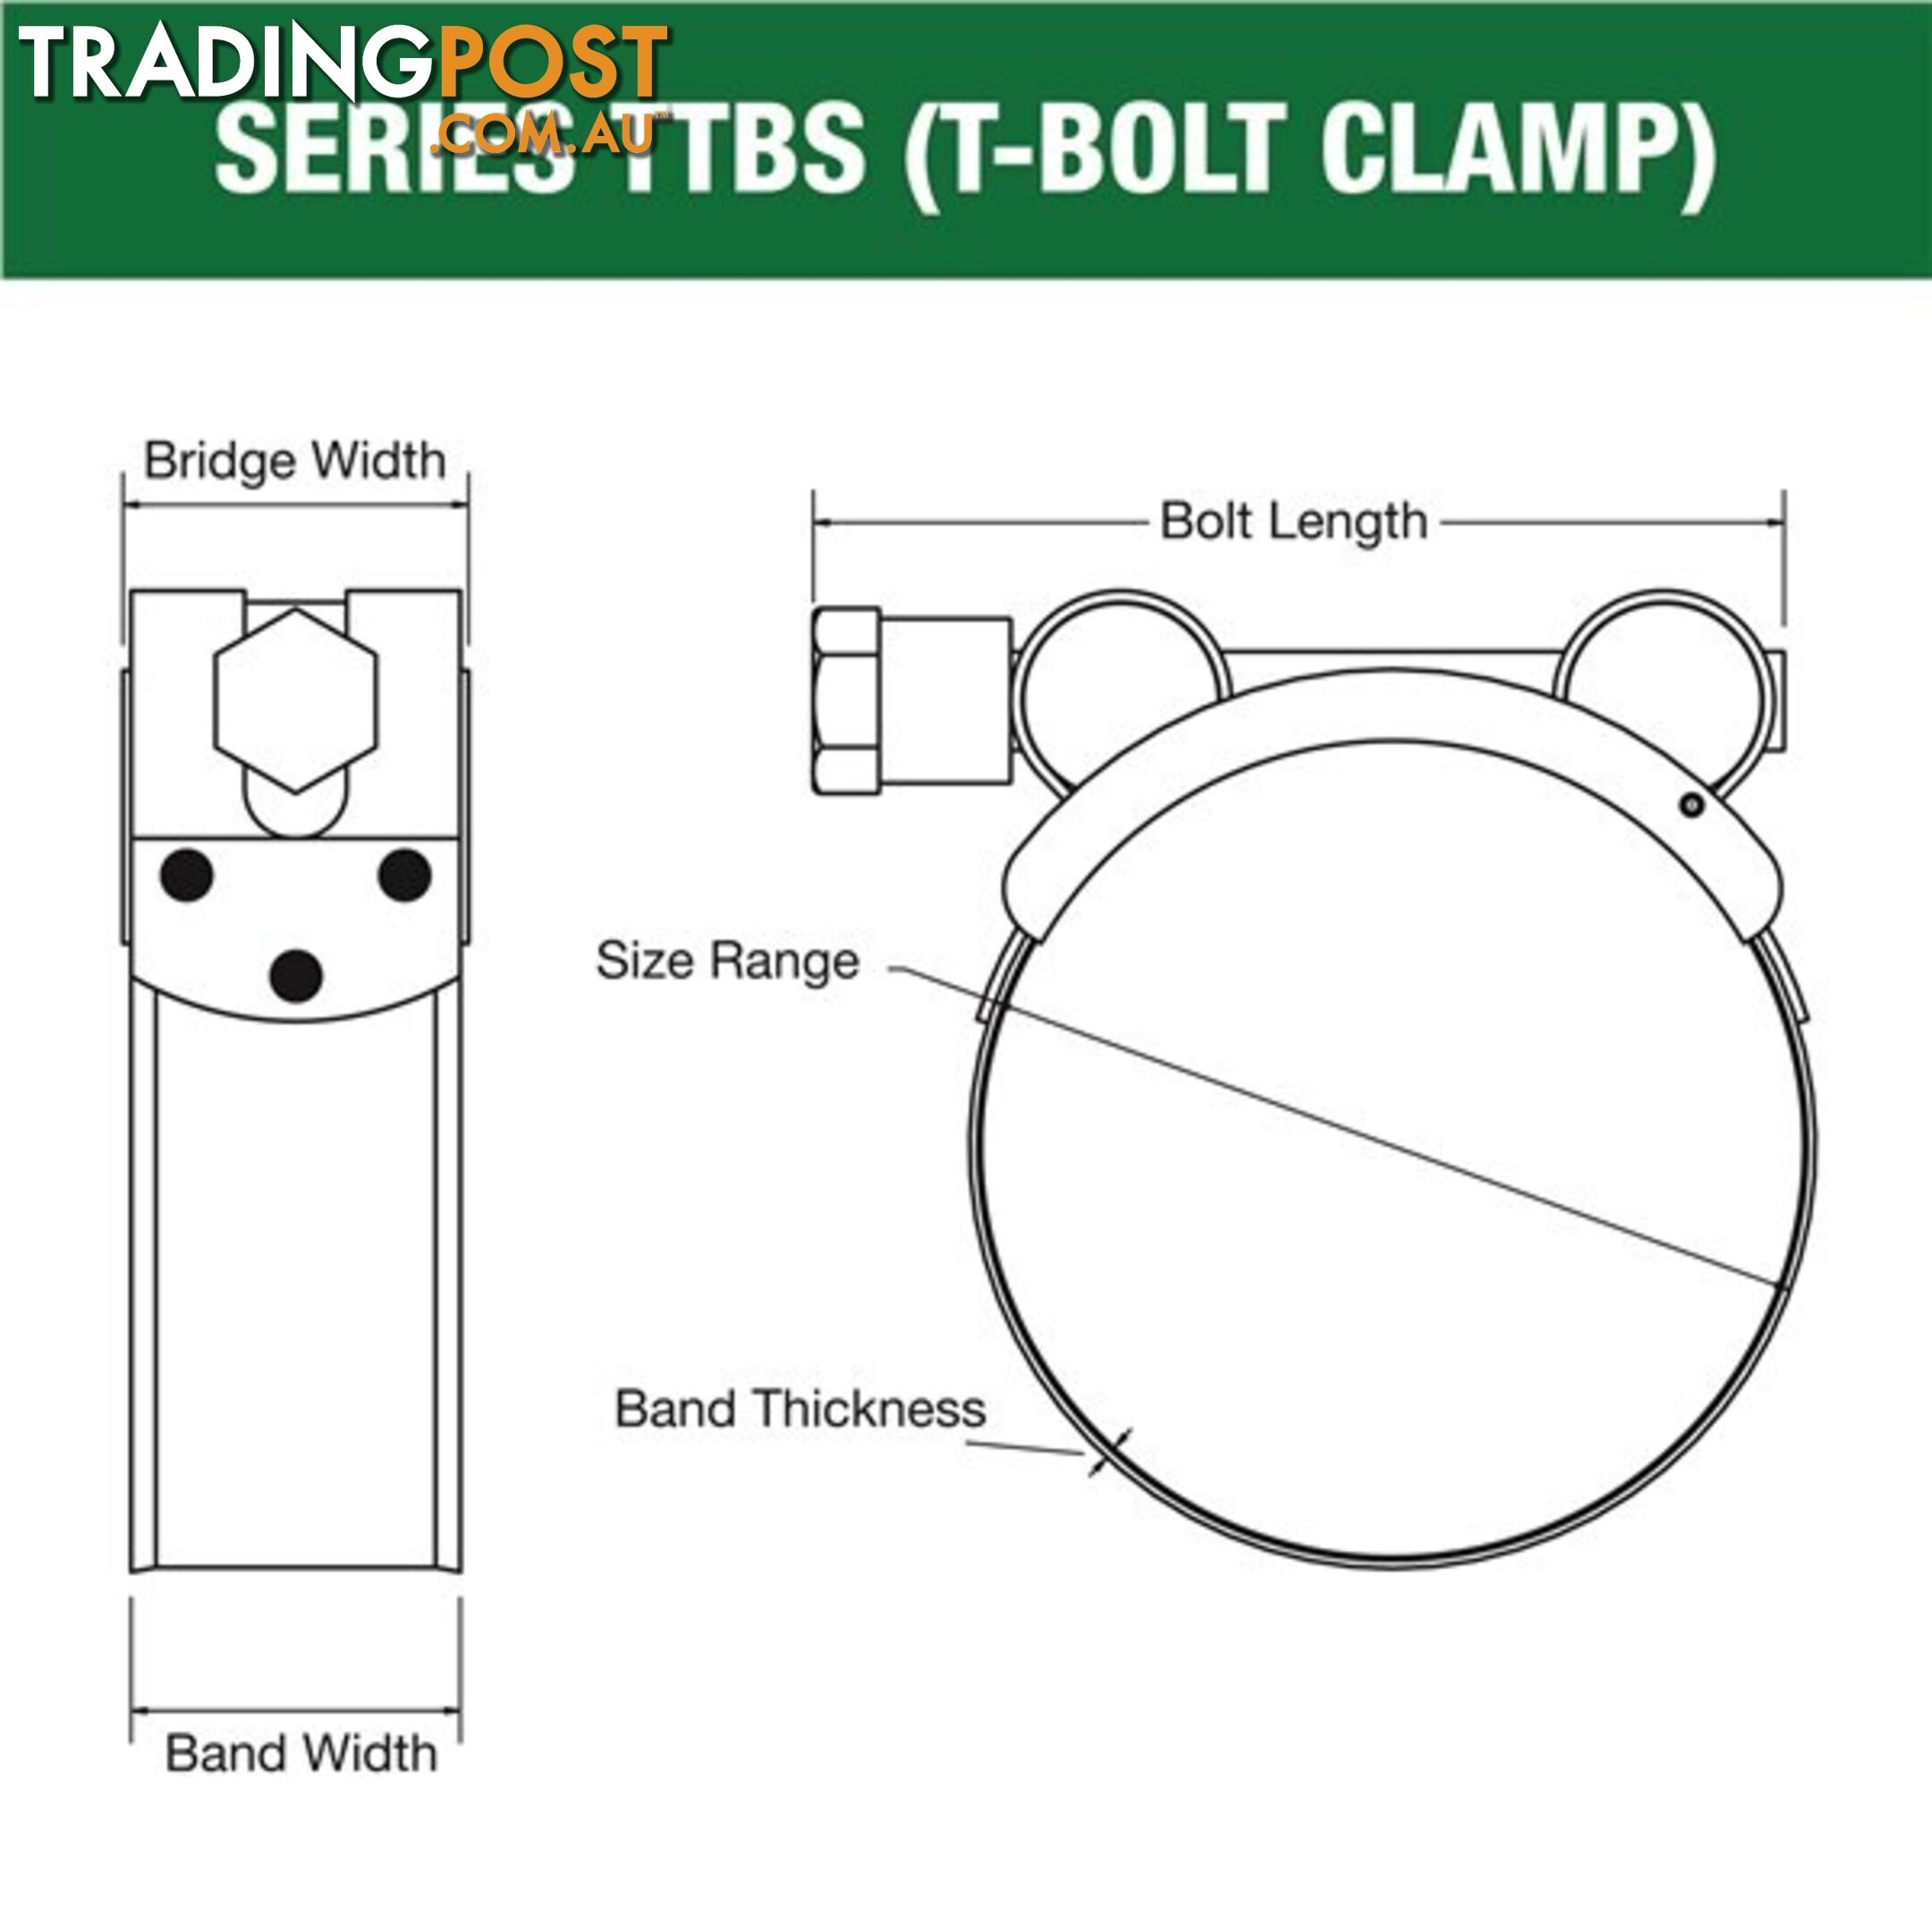 Tridon T-Bolt Hose Clamp 253mm â 265mm All Stainless Solid Band 5pk SKU - TTBS253-265P